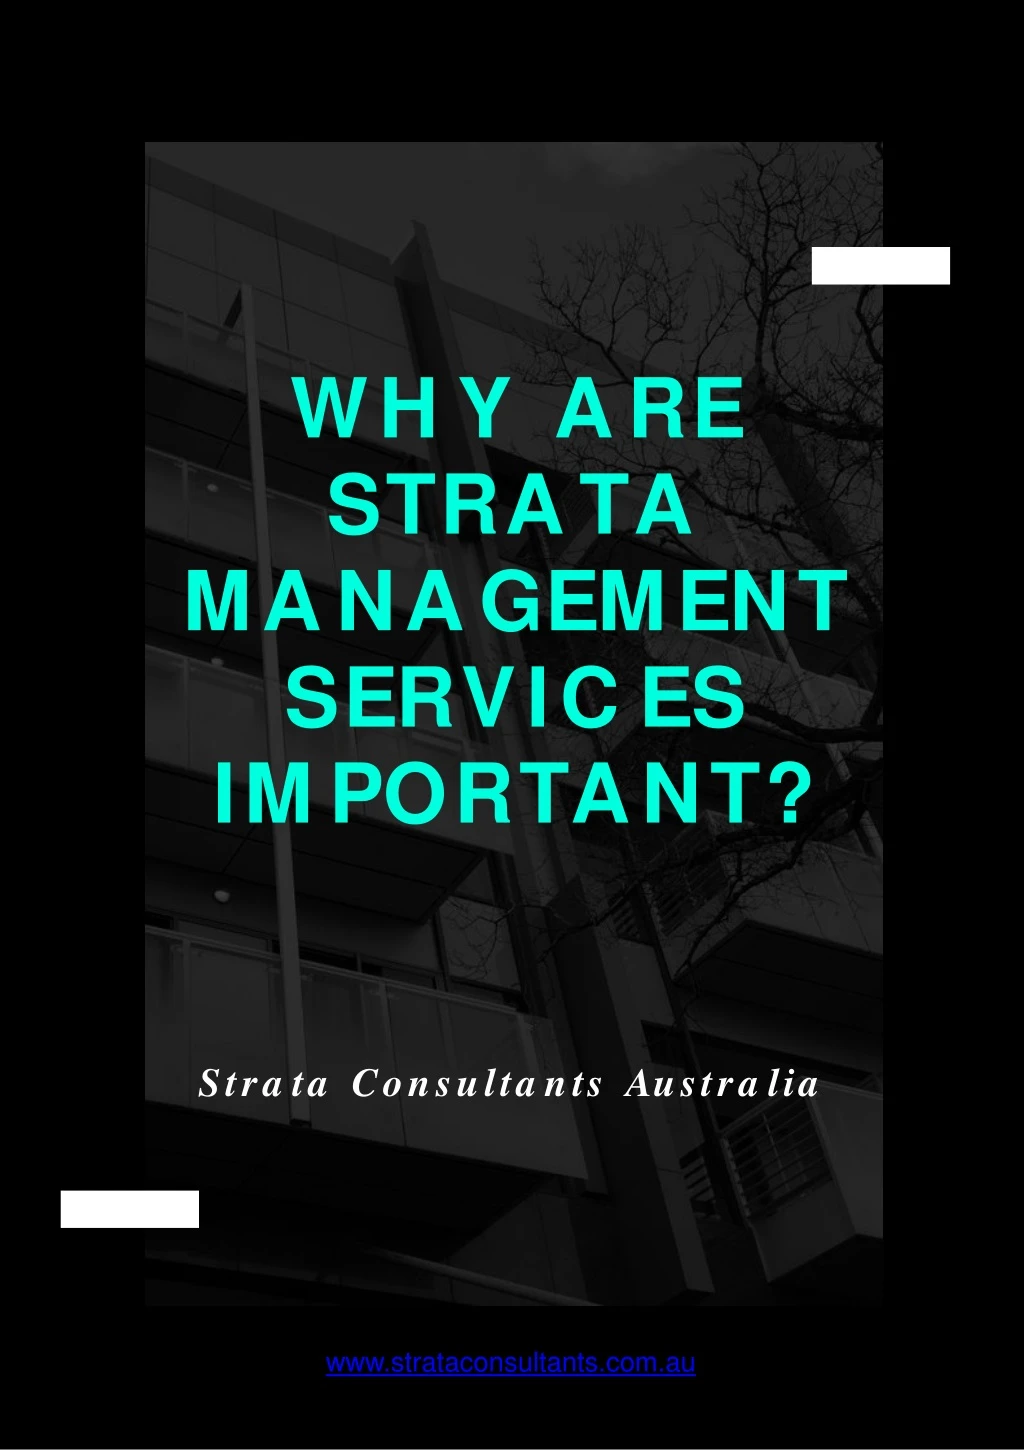 wh y are strata management servic es important